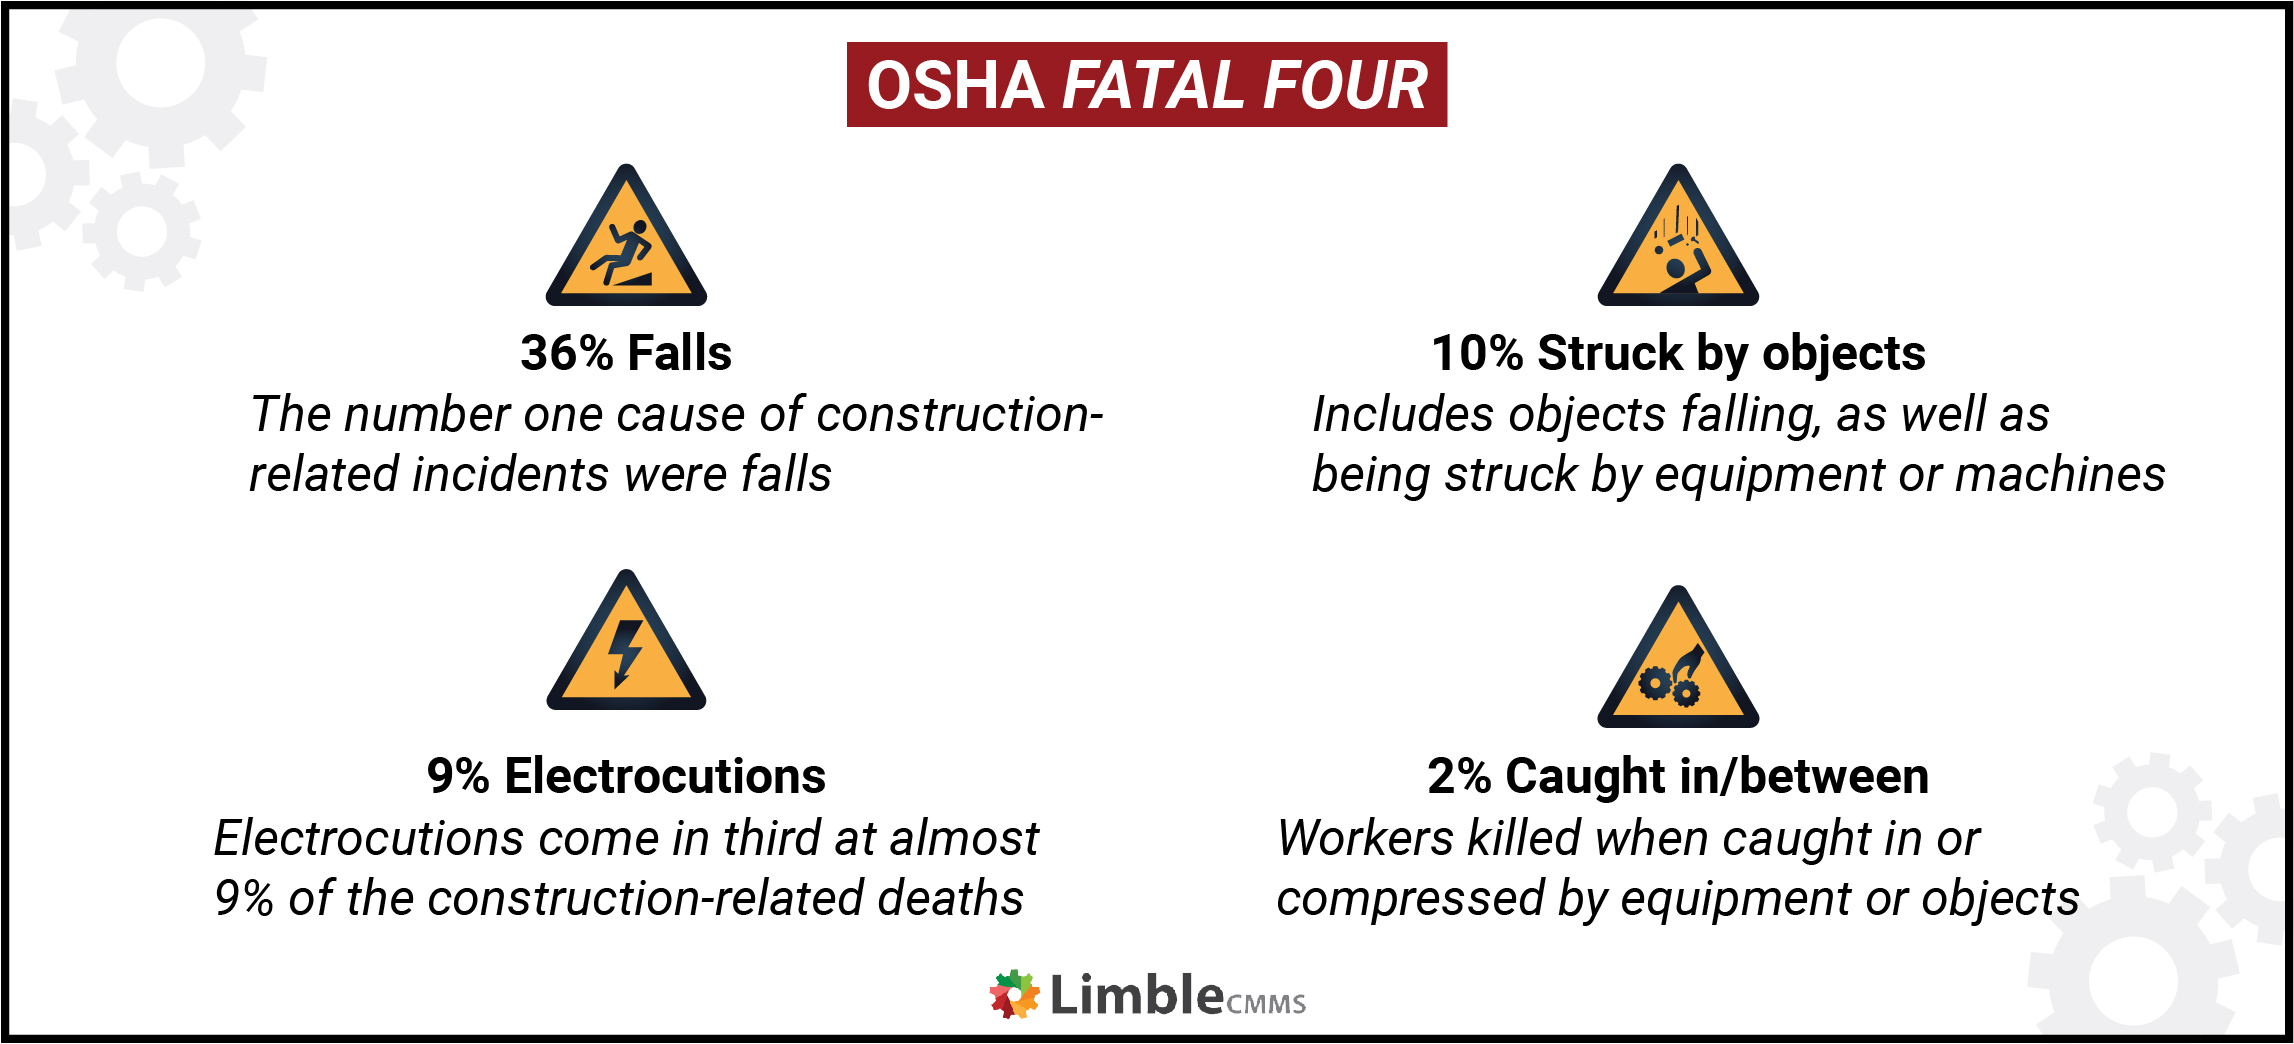 OSHA’s Fatal Four